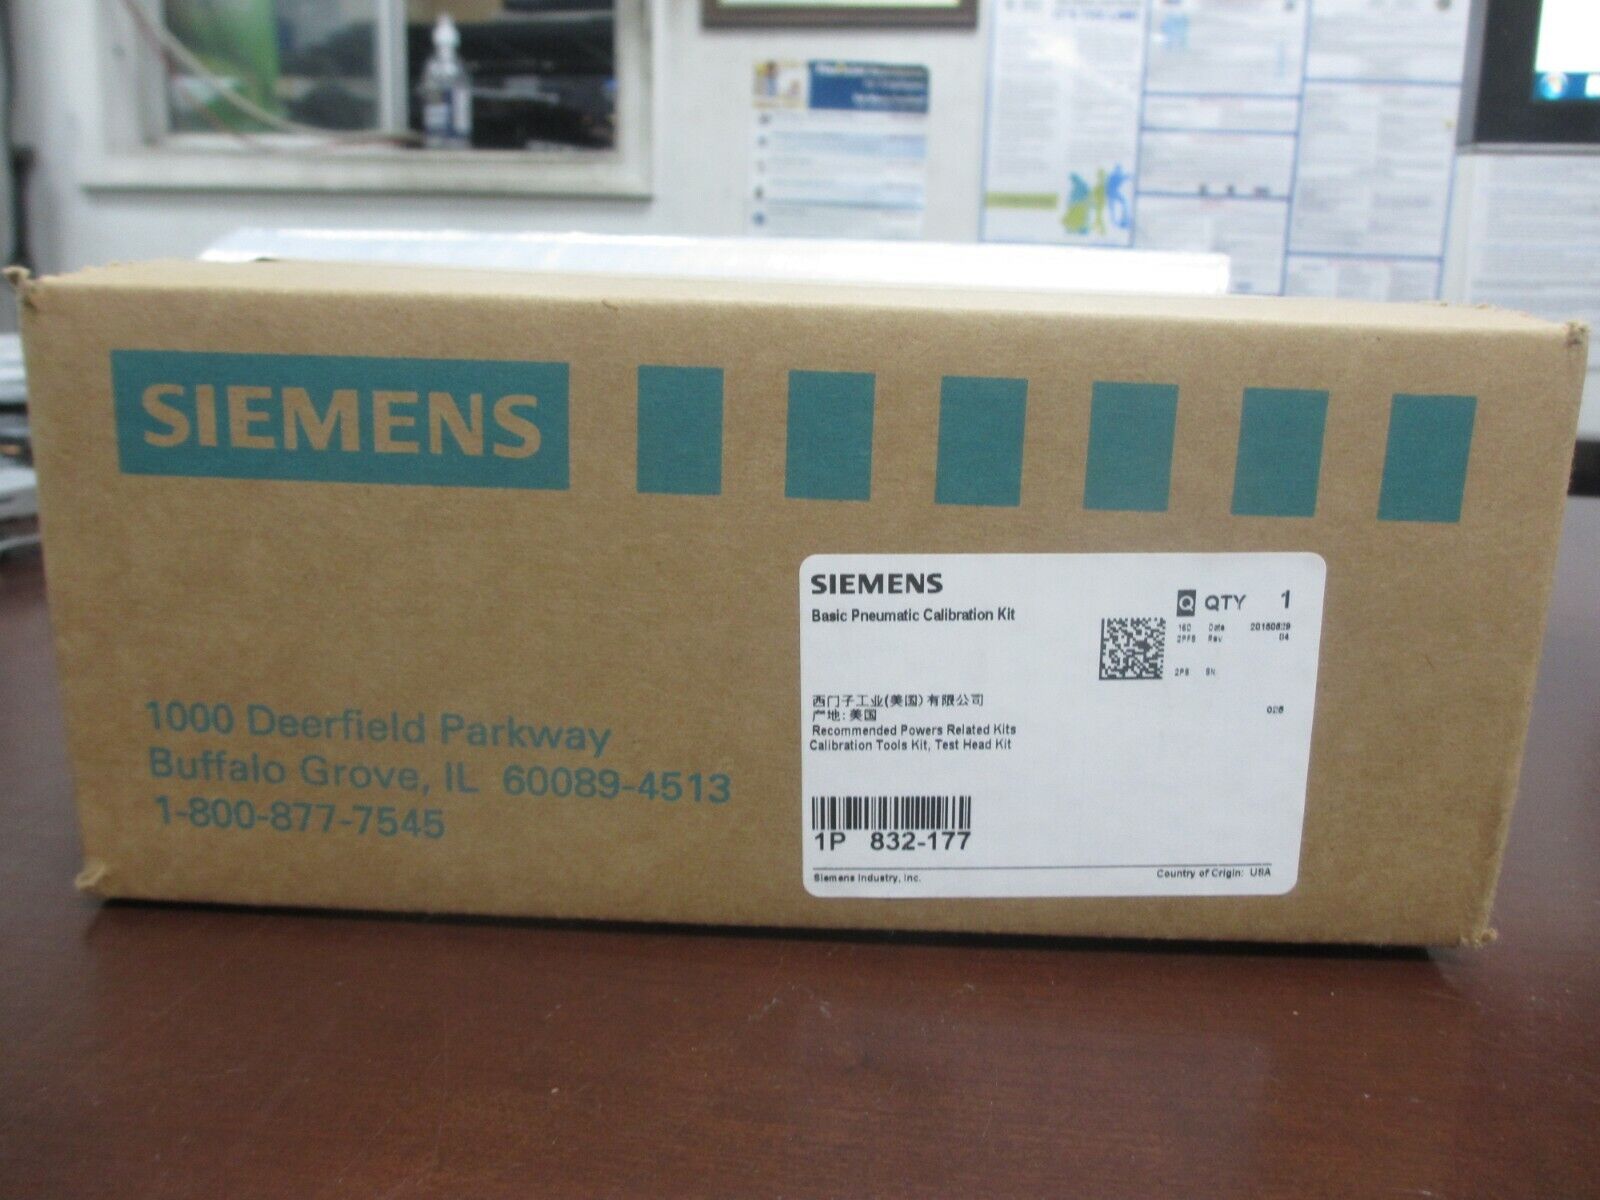 SIEMENS 832-177 Basic Pneumatic Calibration Kit 